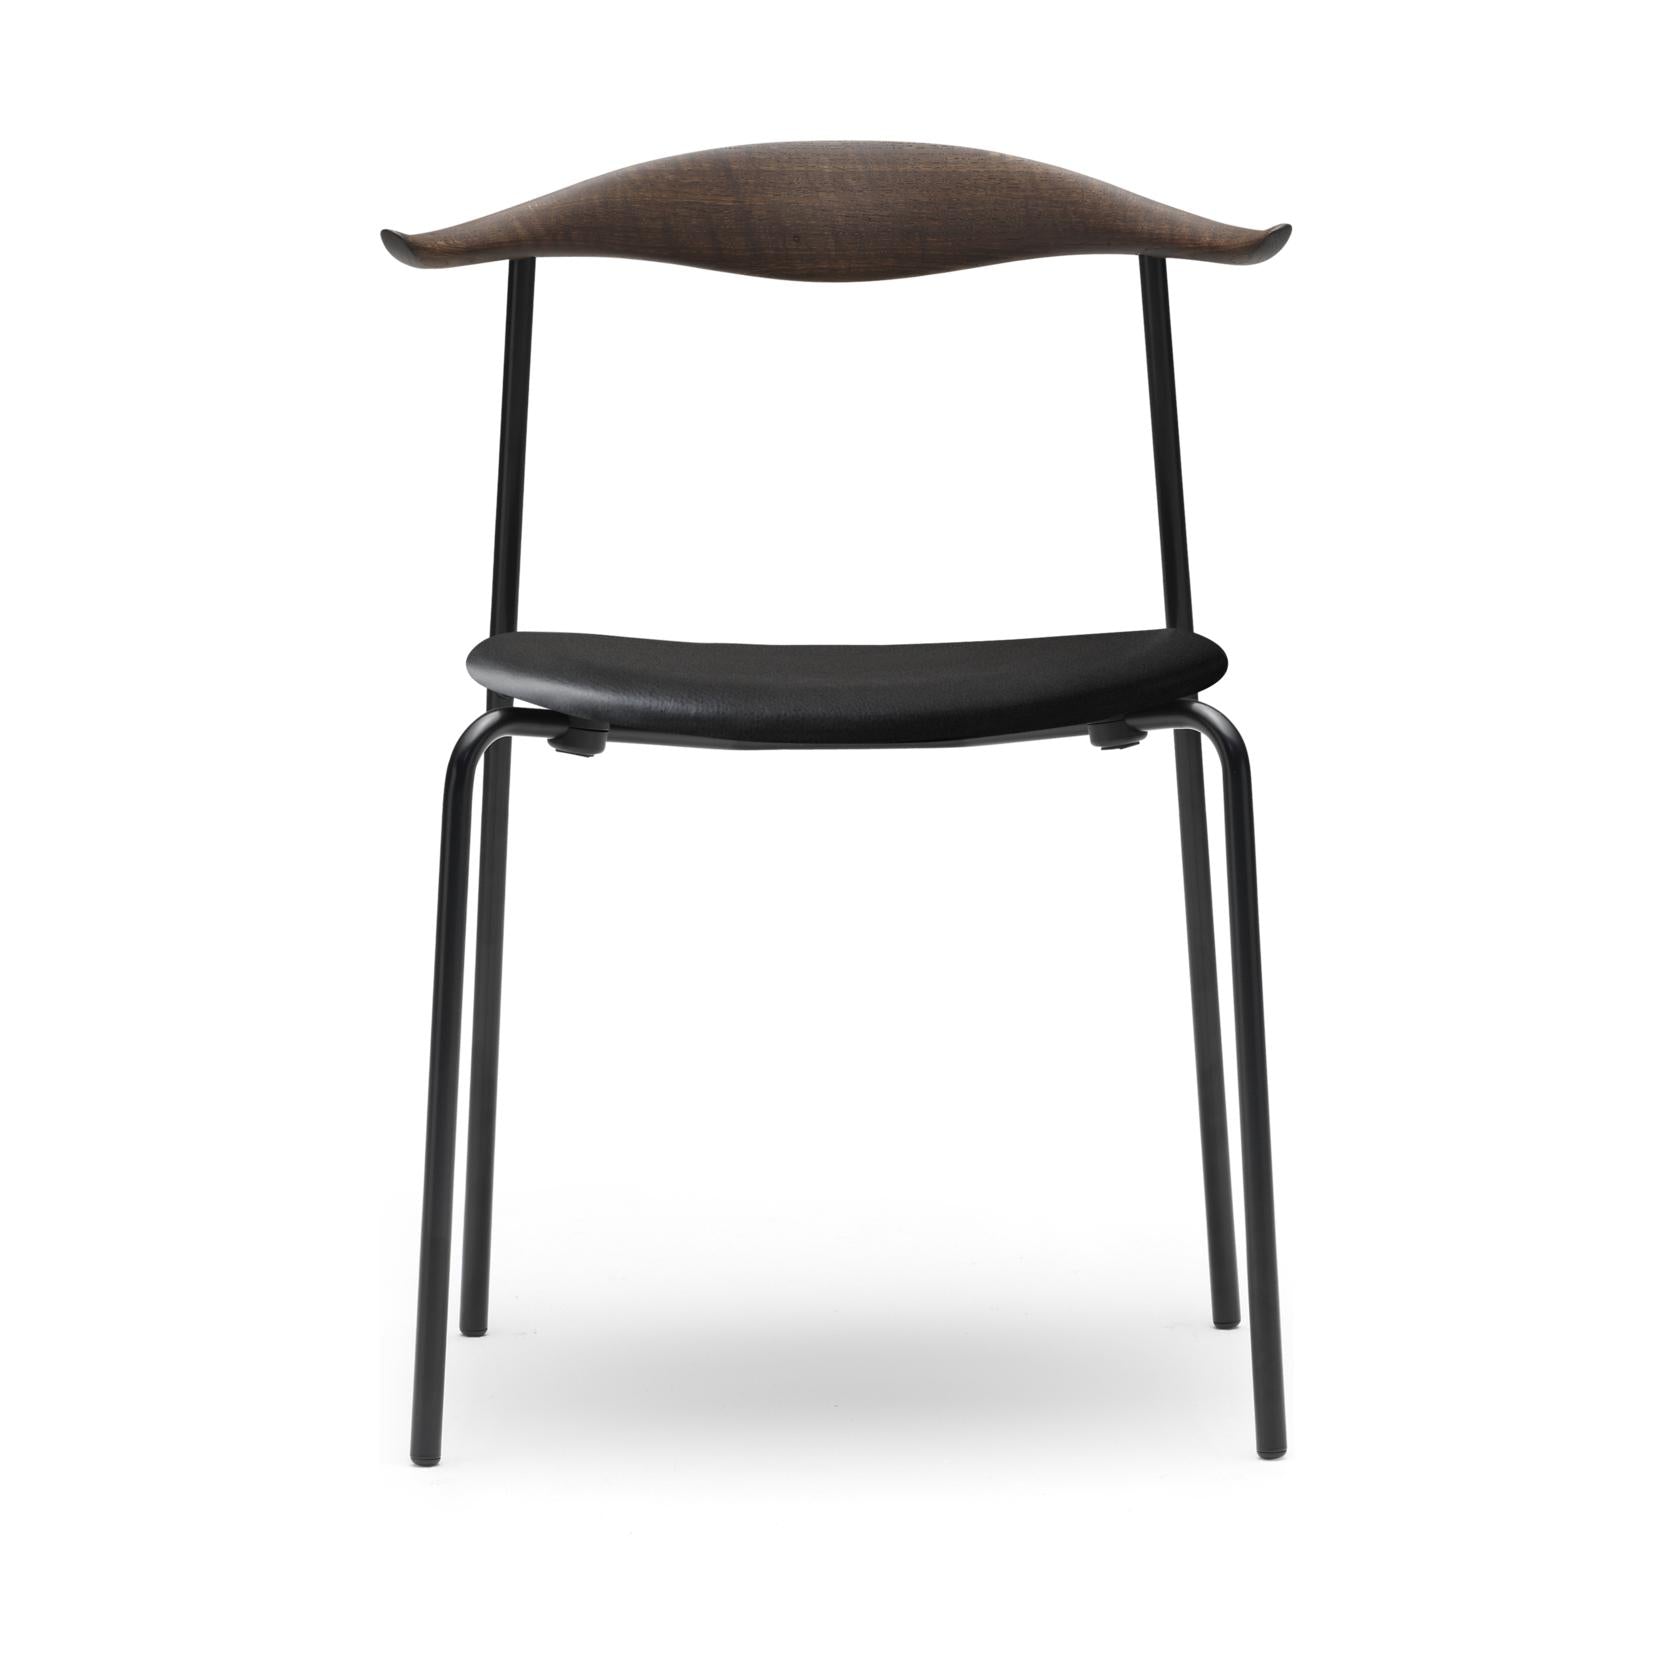 Carl Hansen Ch88 P Chair, Smoked Oak/Black Leather